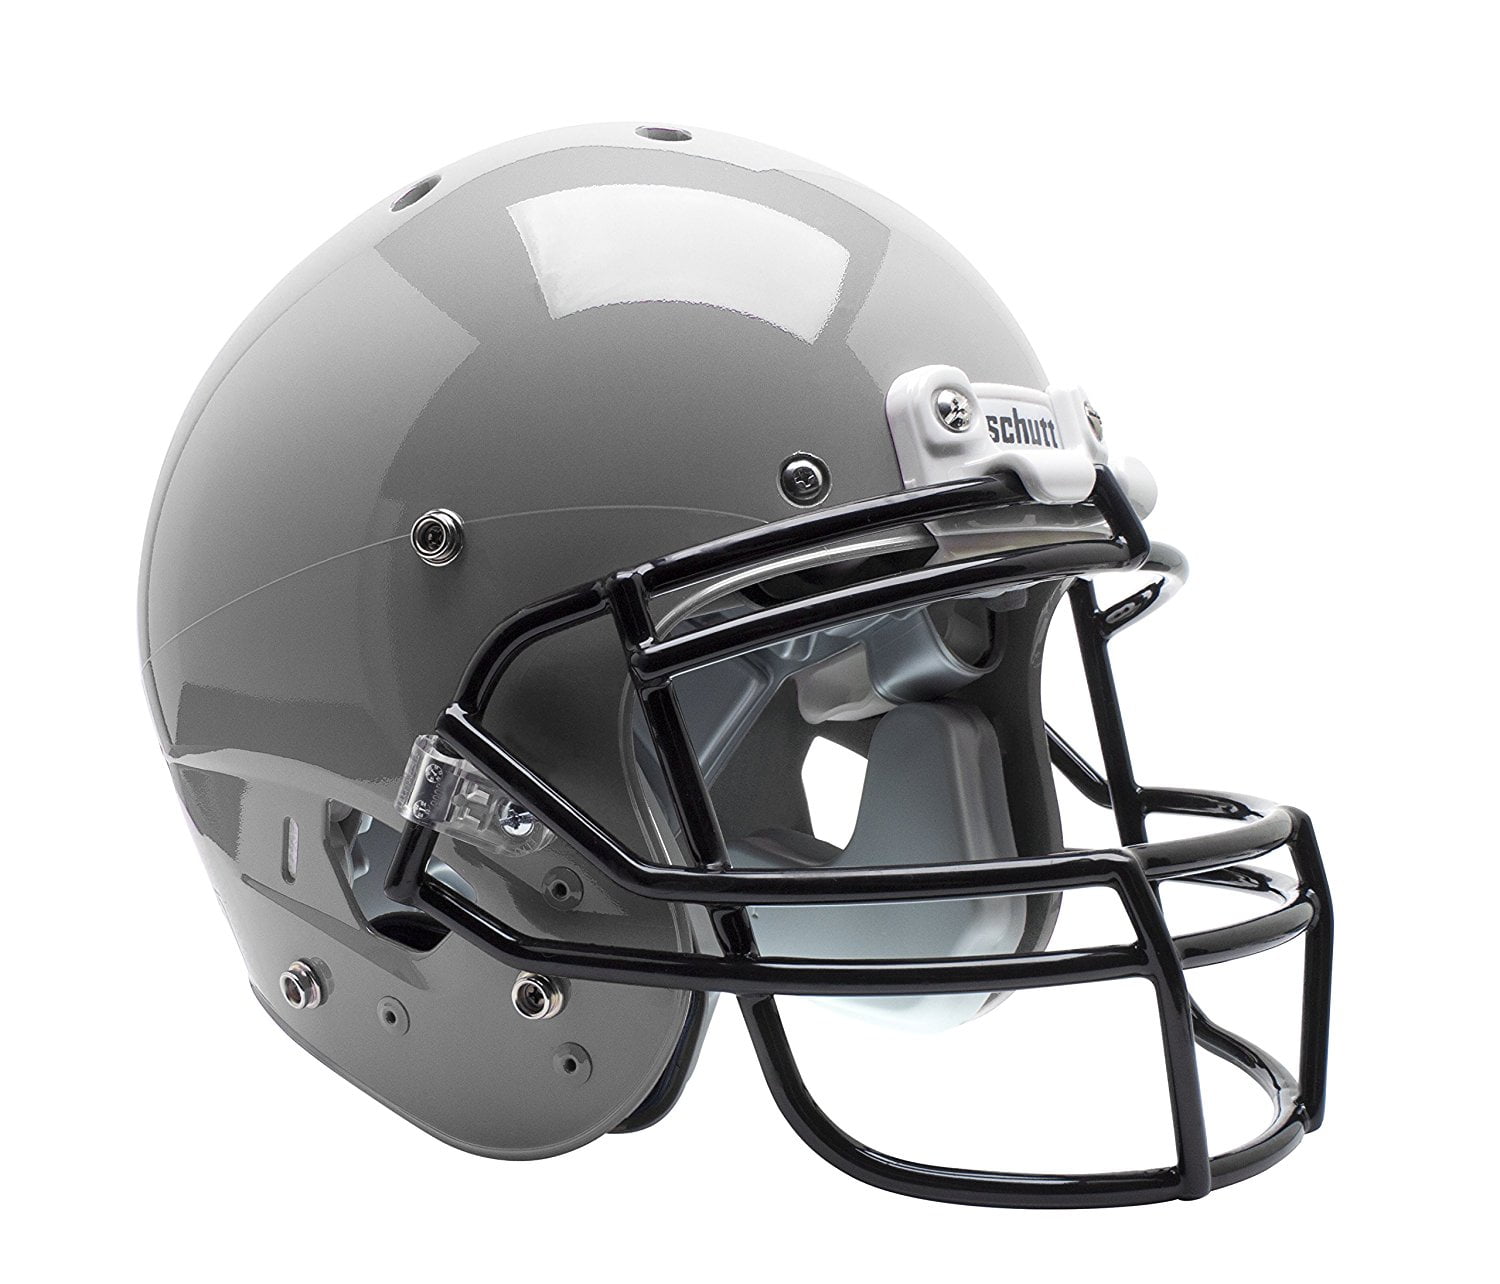 FLAT BLACK Schutt AiR XP Pro VTD II Football Helmet ADULT LARGE w/ Facemask 